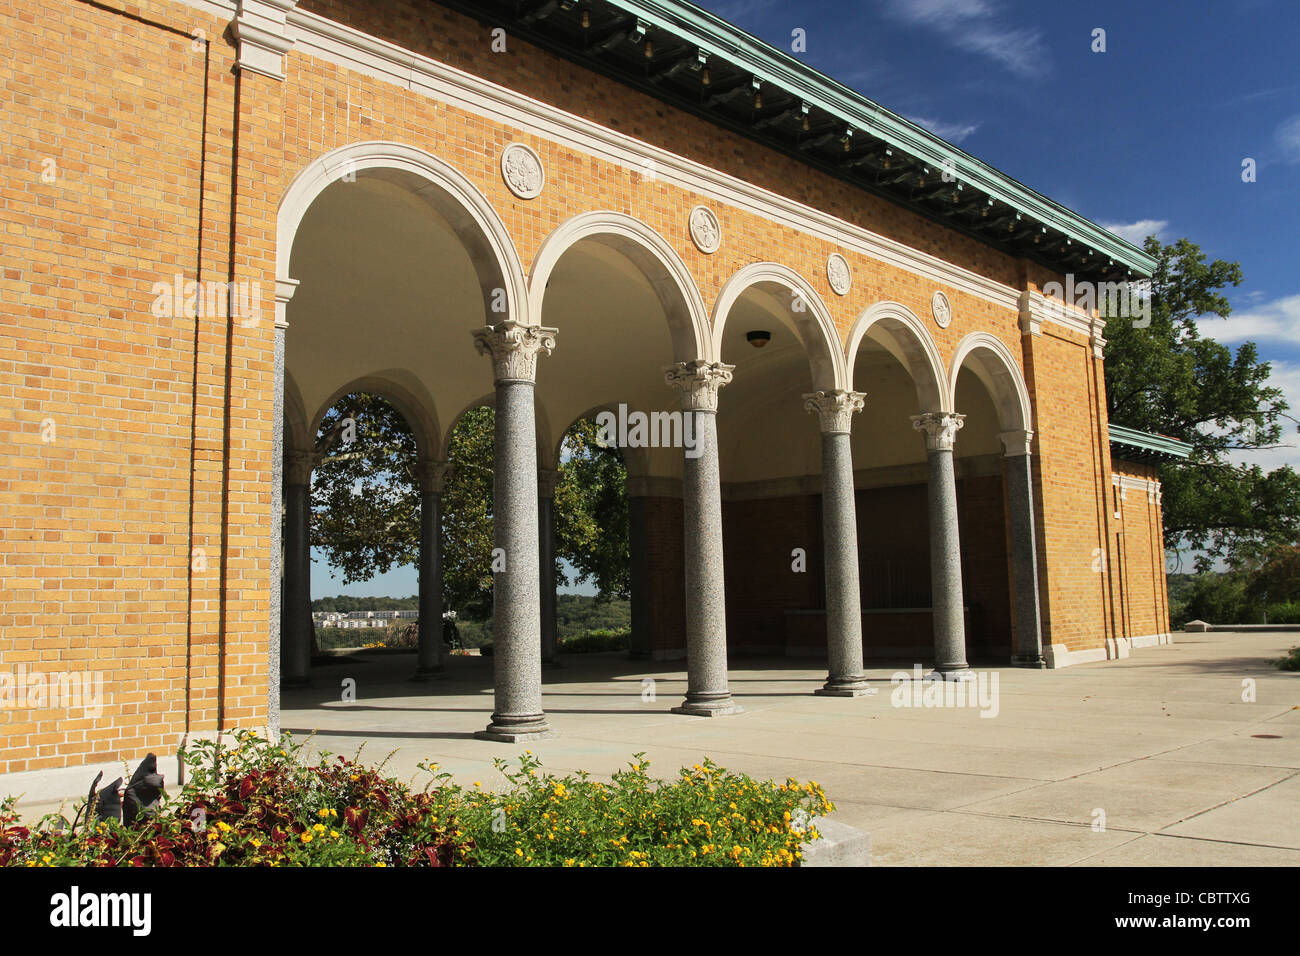 Mount Echo Pavilion. Mount Echo Park, Cincinnati, Ohio, USA. Italian Renaissance architecture with Roman columns. Stock Photo